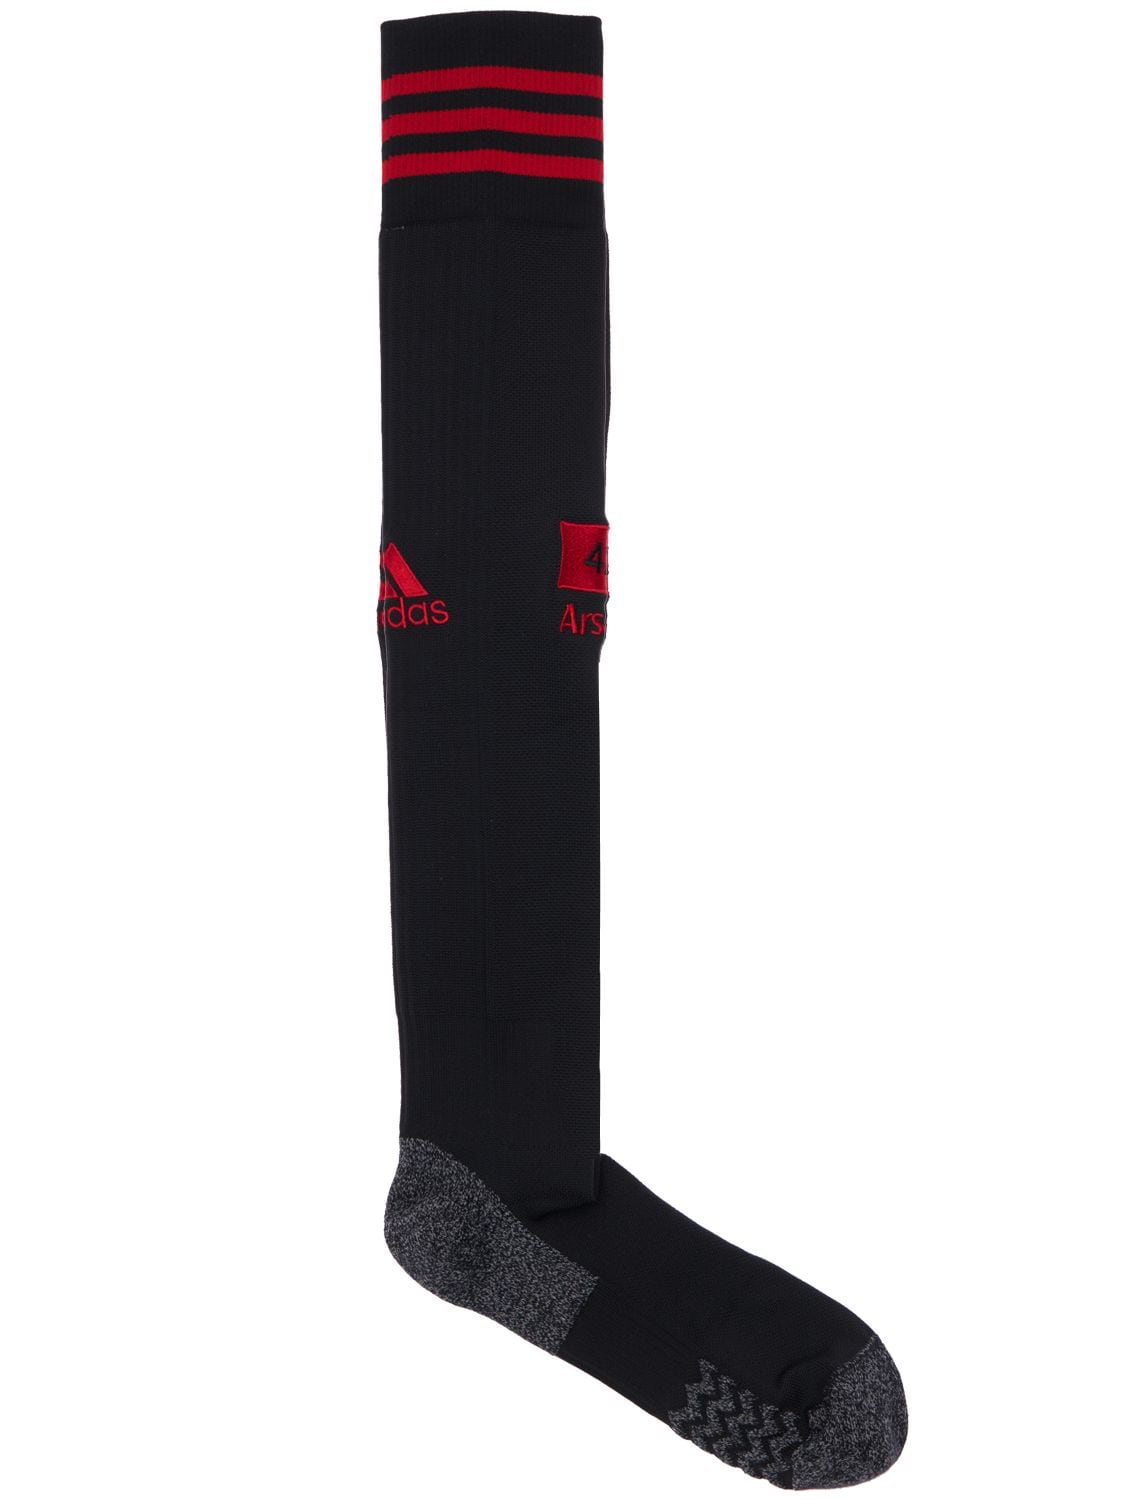 Adidas Originals Statement Afc X 424 Socks In Black